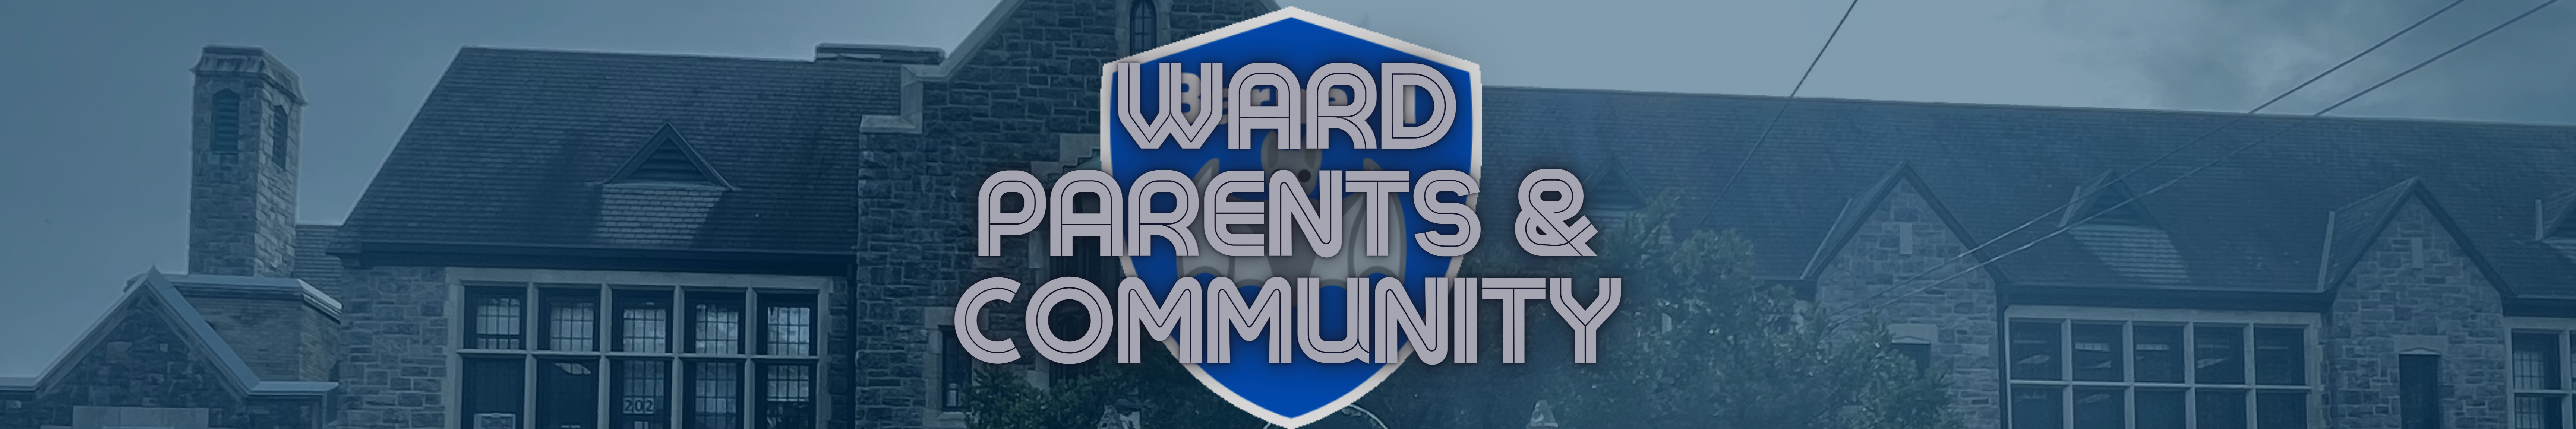 Ward Parents & Community banner